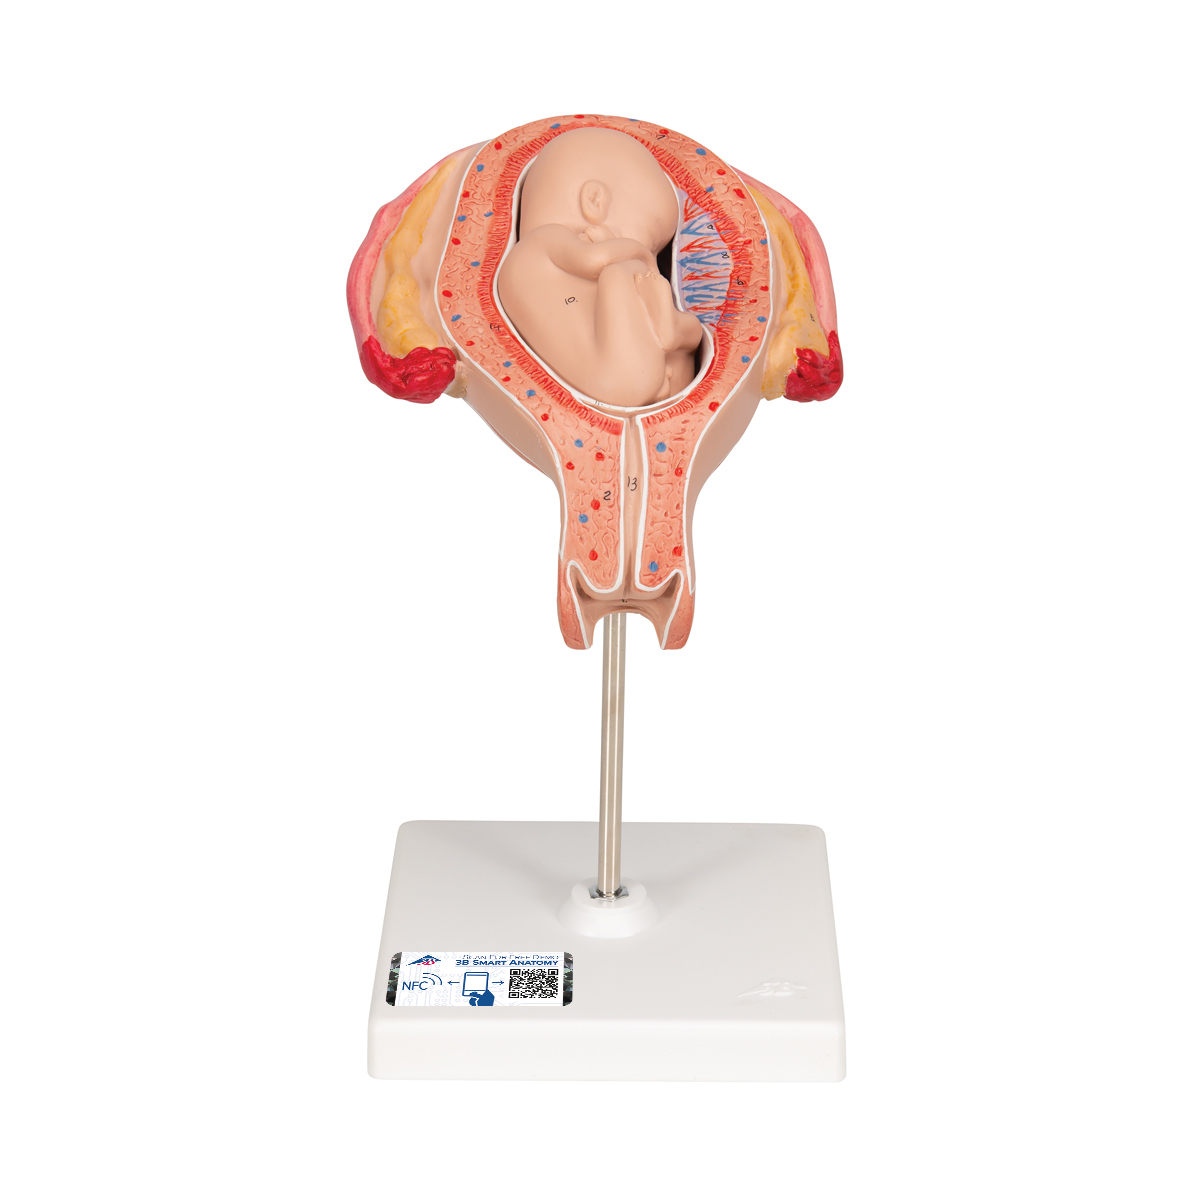 Fetus Modell, 5. Monat, Steißlage - 3B Smart Anatomy, Bestellnummer 1018630, L10/5, 3B Scientific